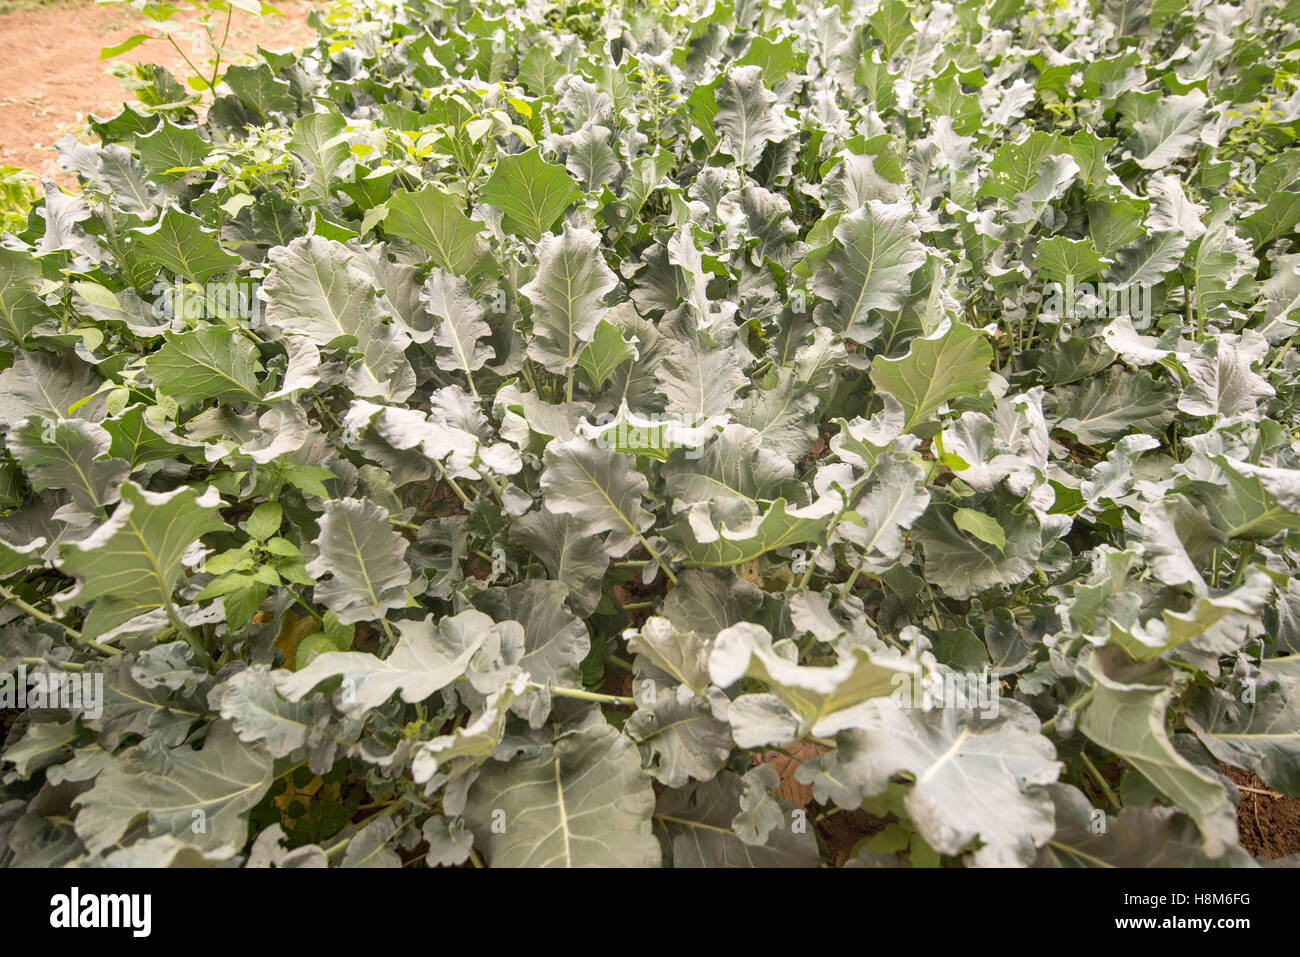 Beijing, China - Campo de verdes comestibles crecen en una granja cerca de Beijing, China. Foto de stock